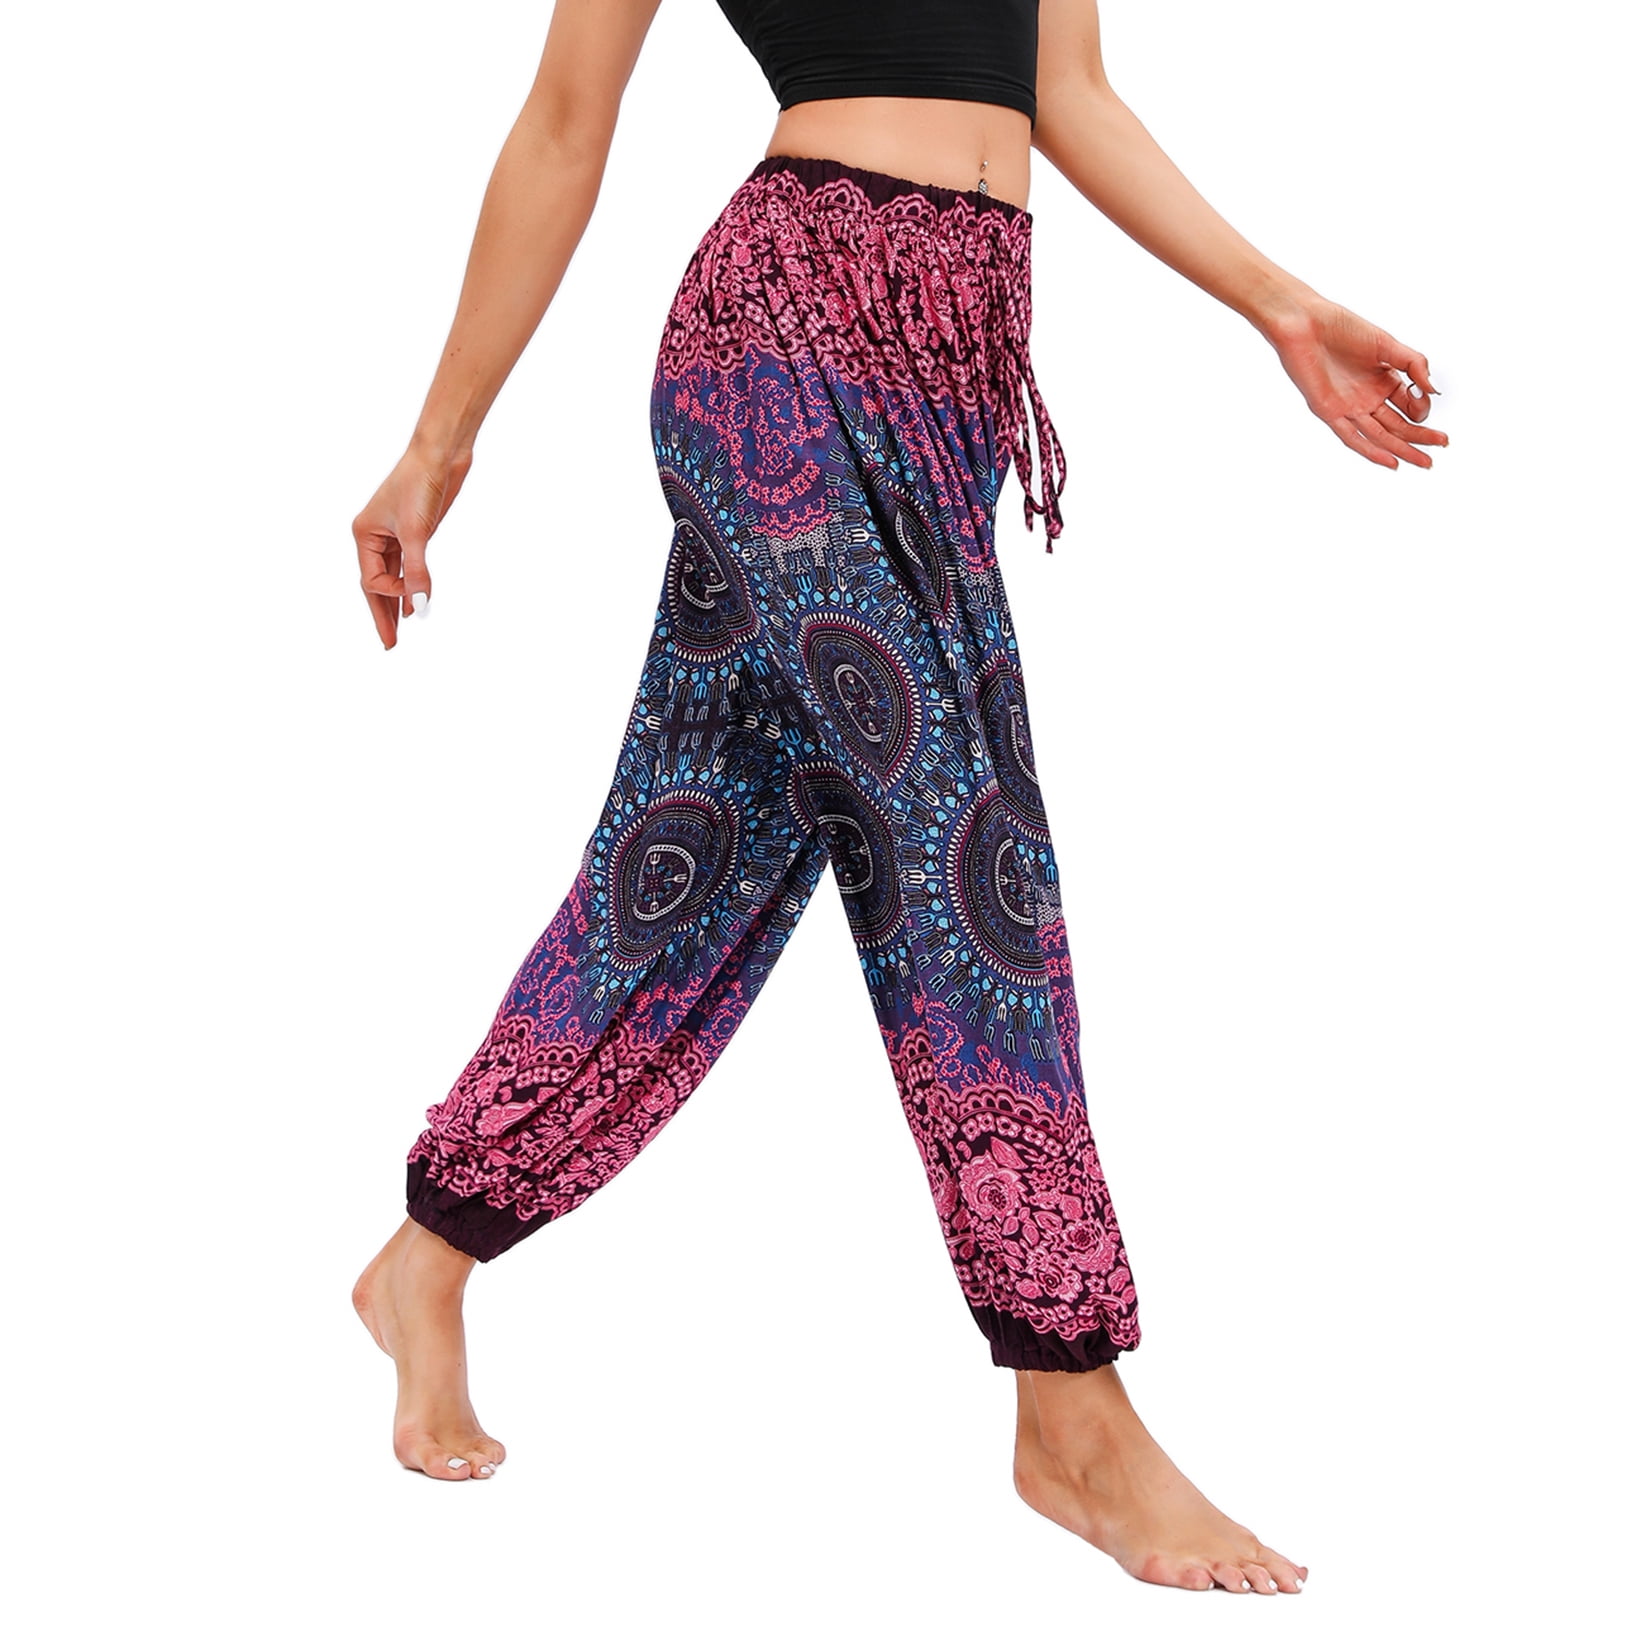 Bohotusk Womens Plus Size Harem Pants 4XL 48-56 Inch Waist Various Designs  Baggy Yoga Pants High Waist Pants Hippie Pants -  Singapore